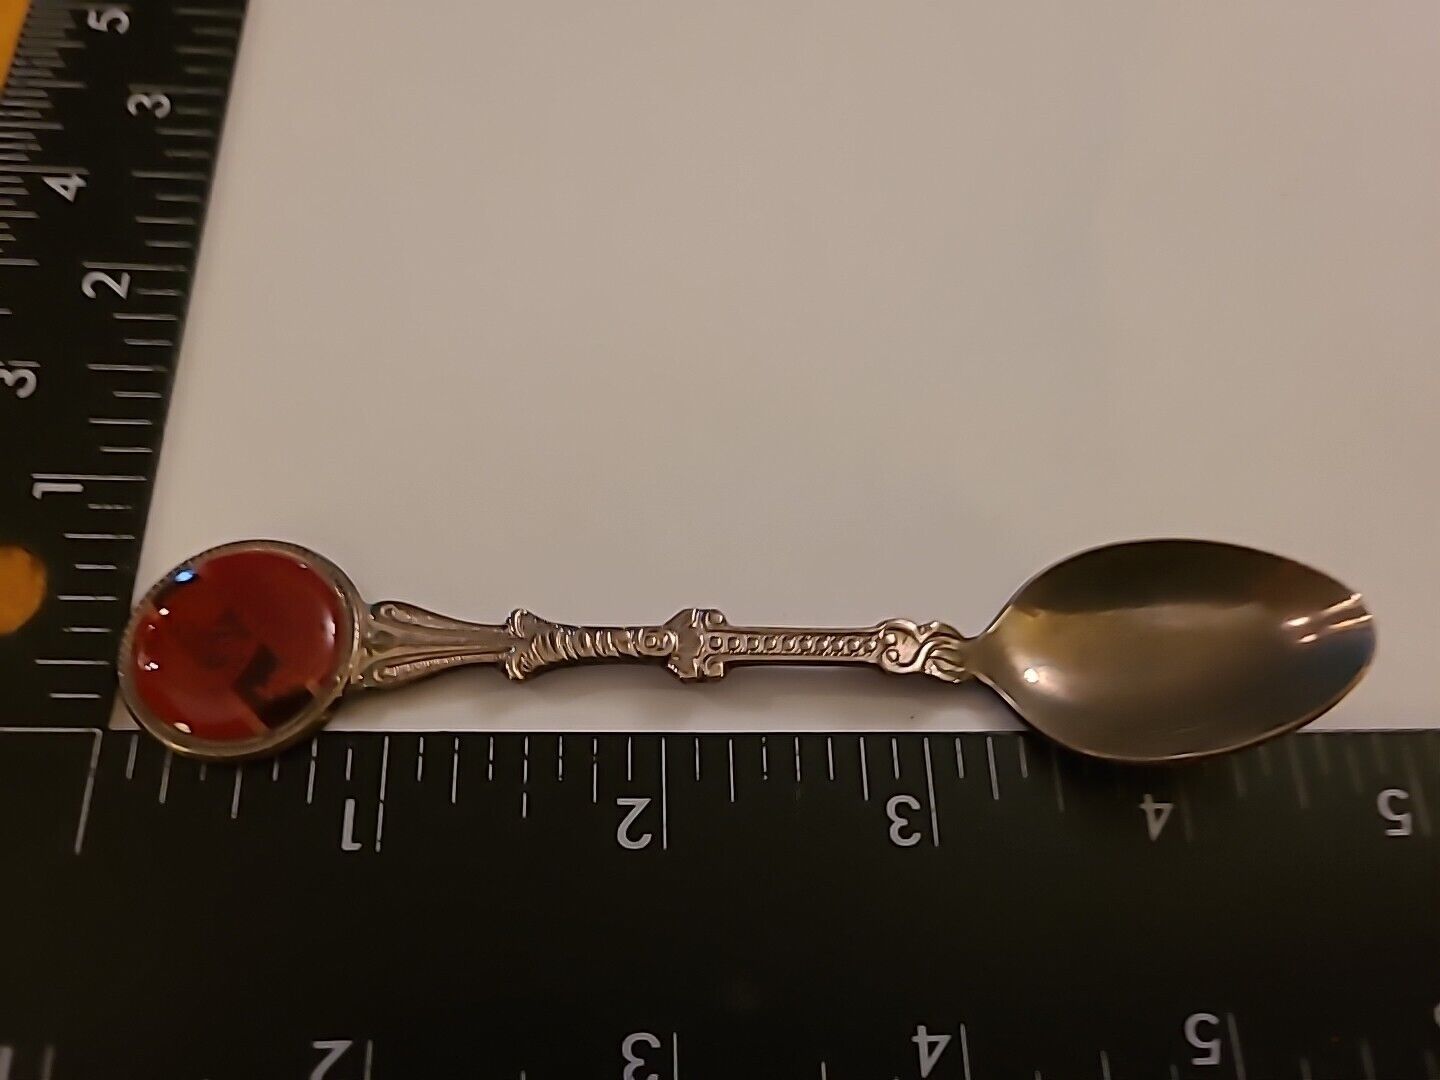 1981 Royal Wedding Prince Charles/Princess Diana Souvenir Spoon 